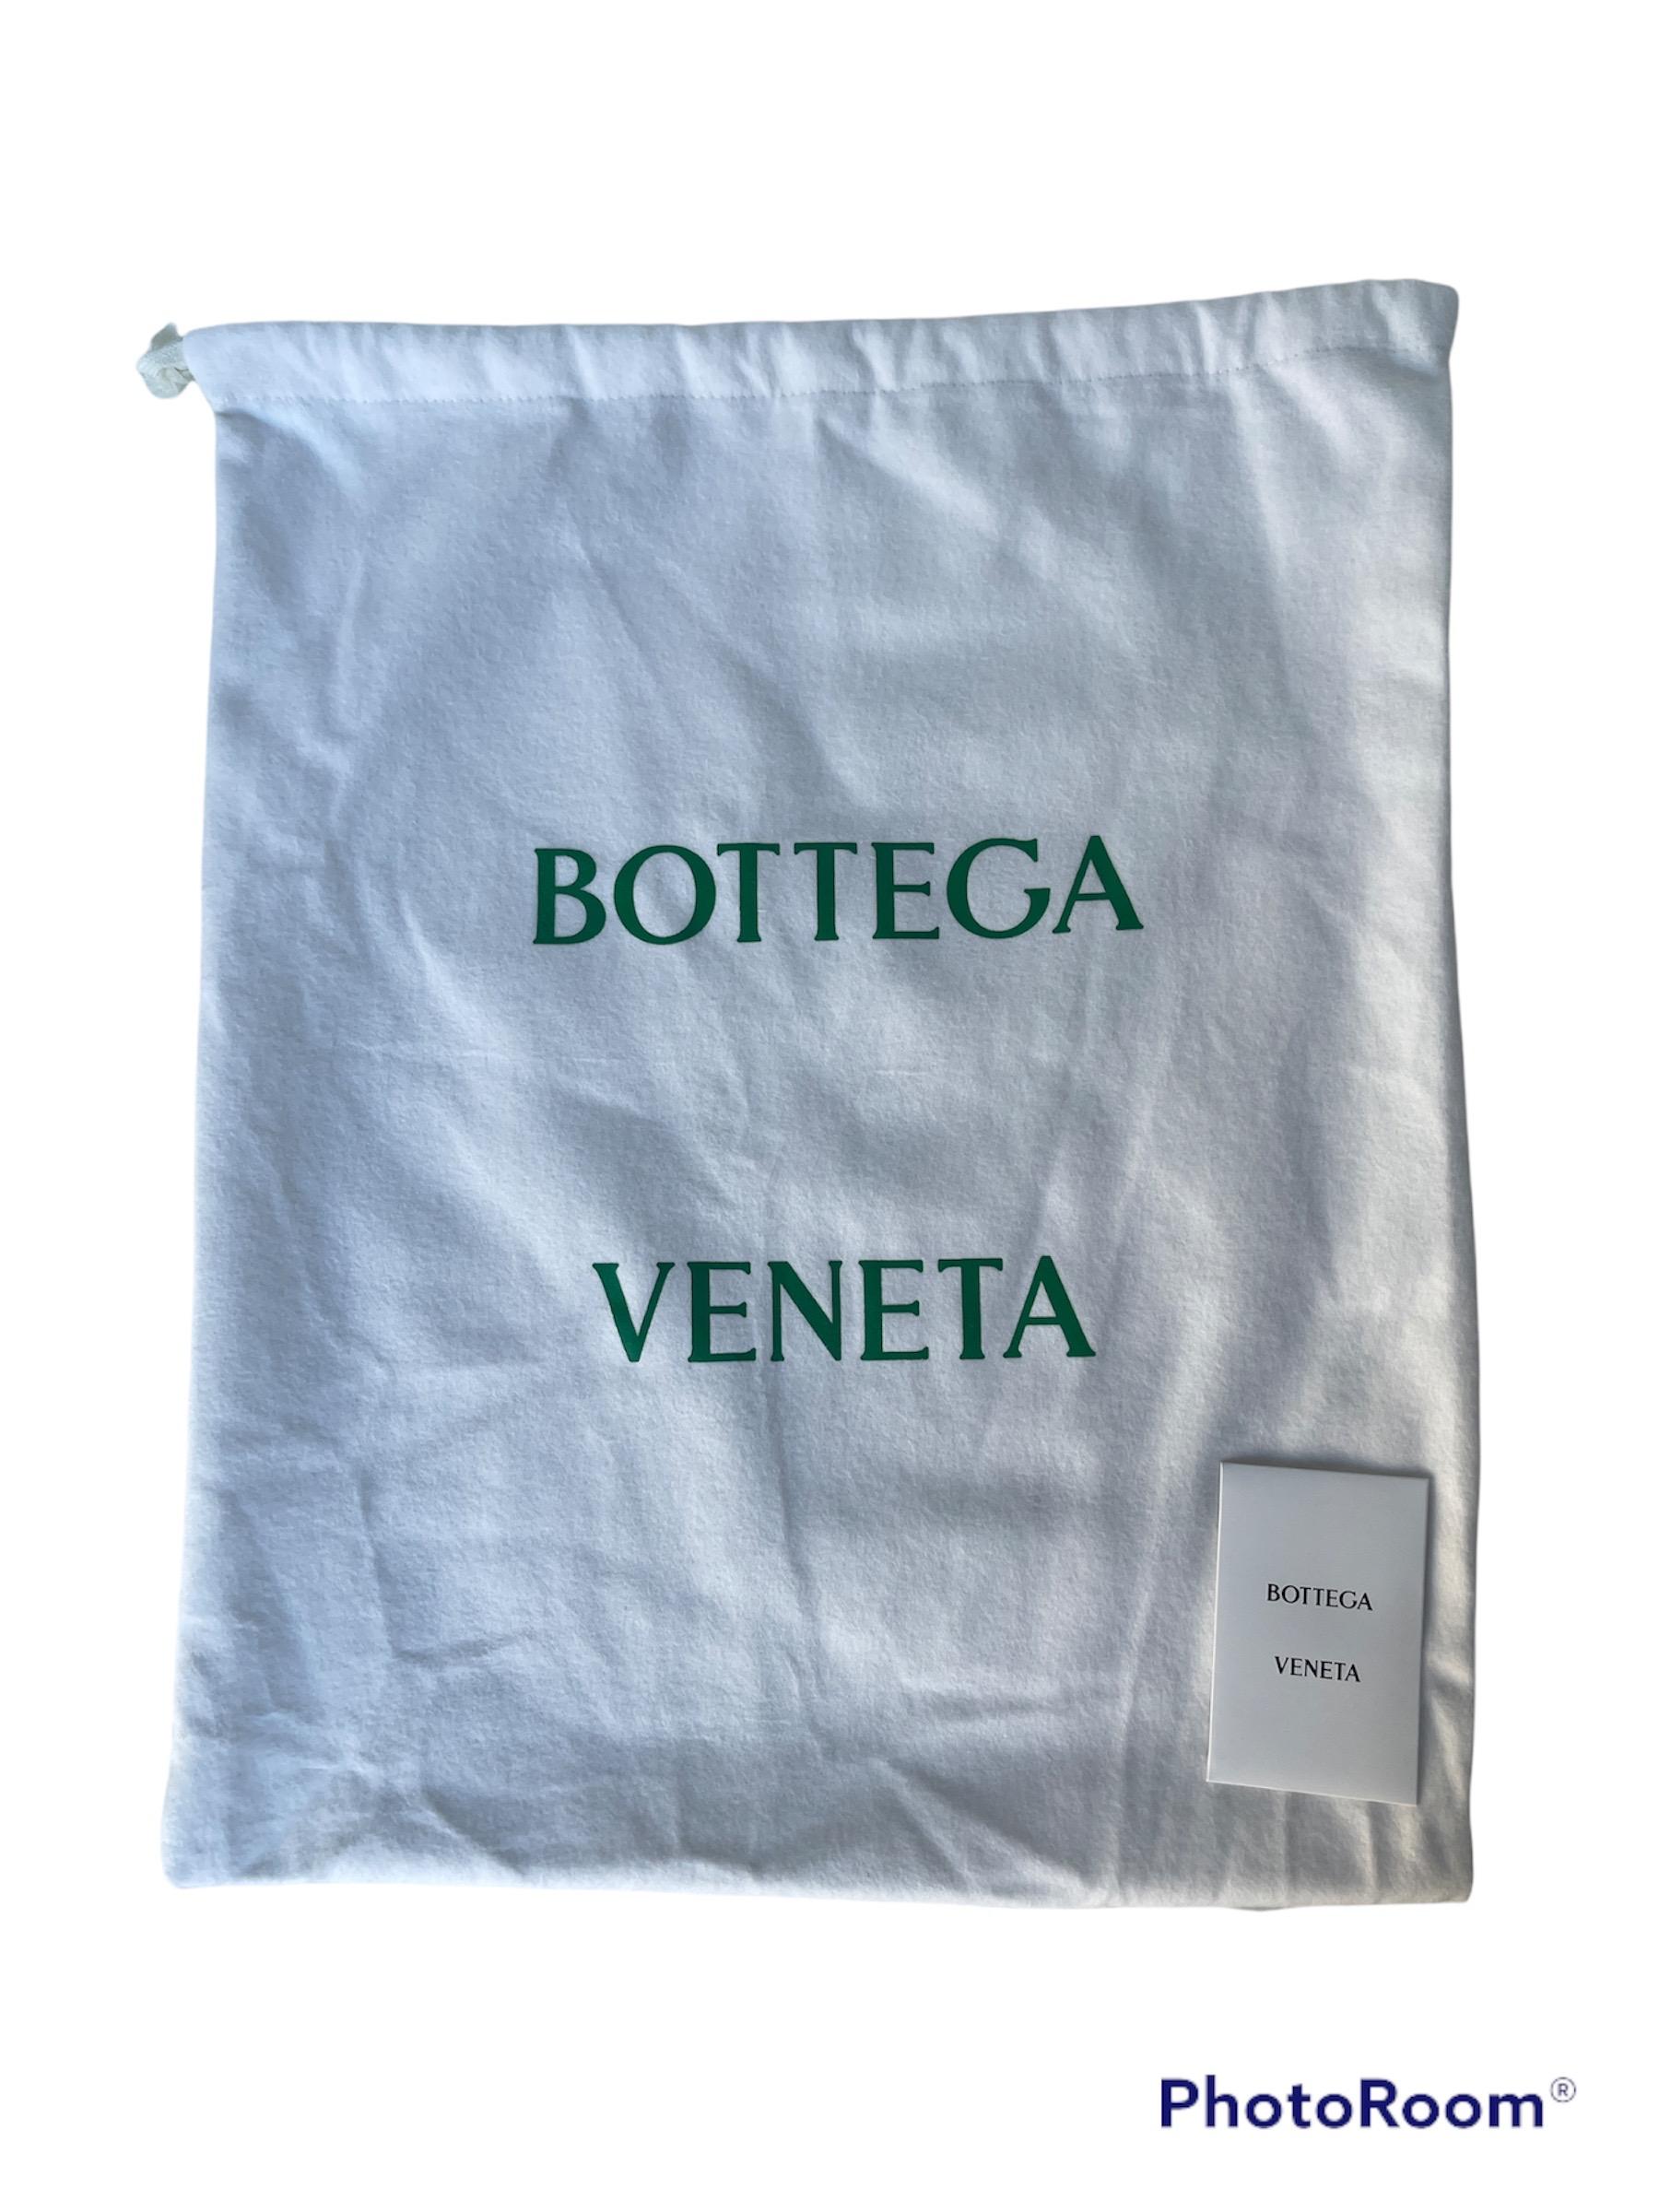 Bottega Veneta BV Porridge Shearling The Pouch Chain Shoulder Bag rt $4, 100 2